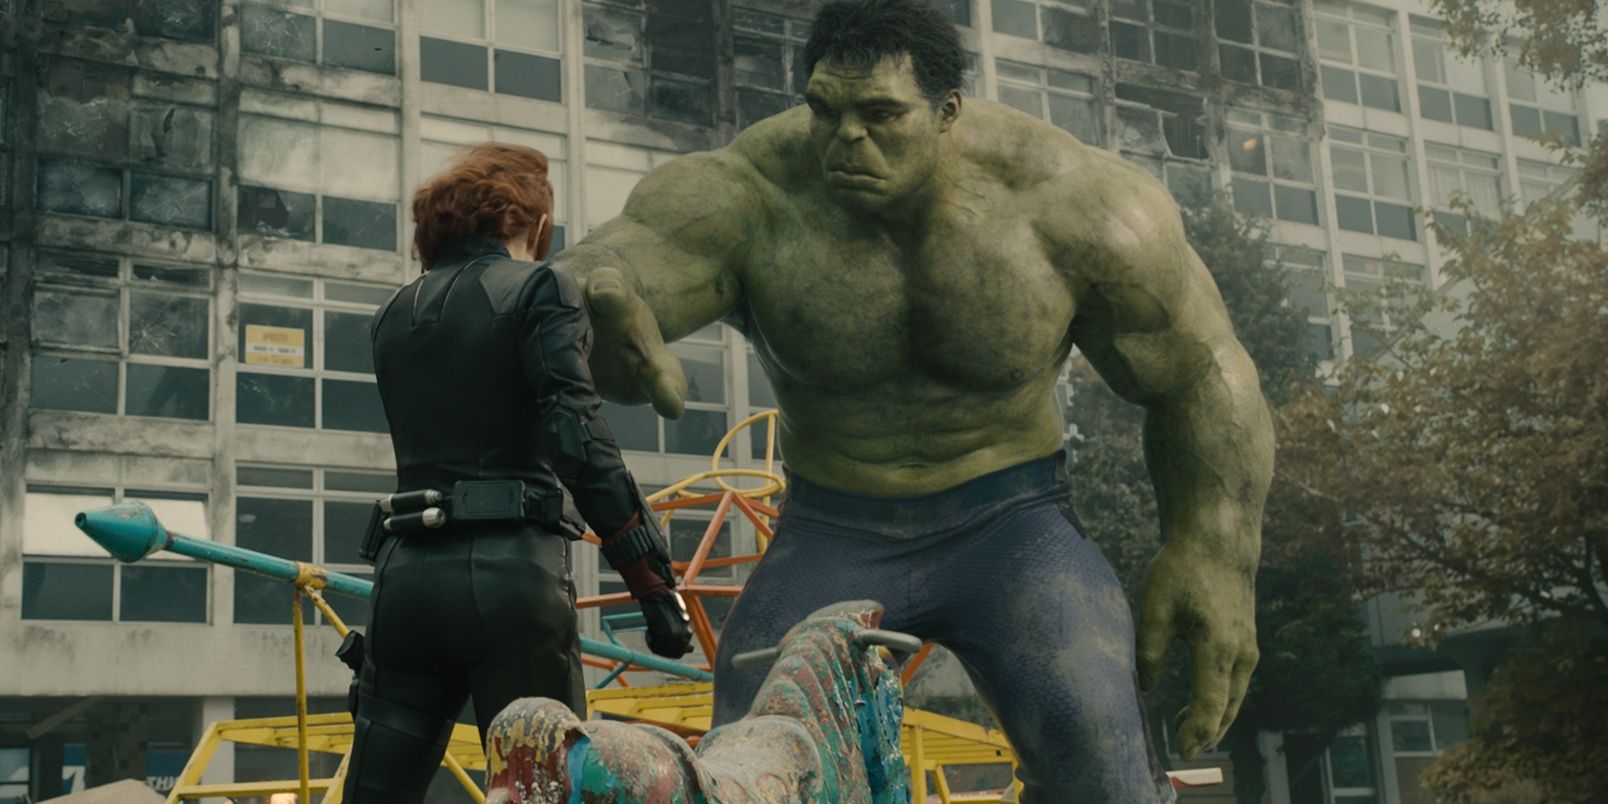 Hulk and Black Widow